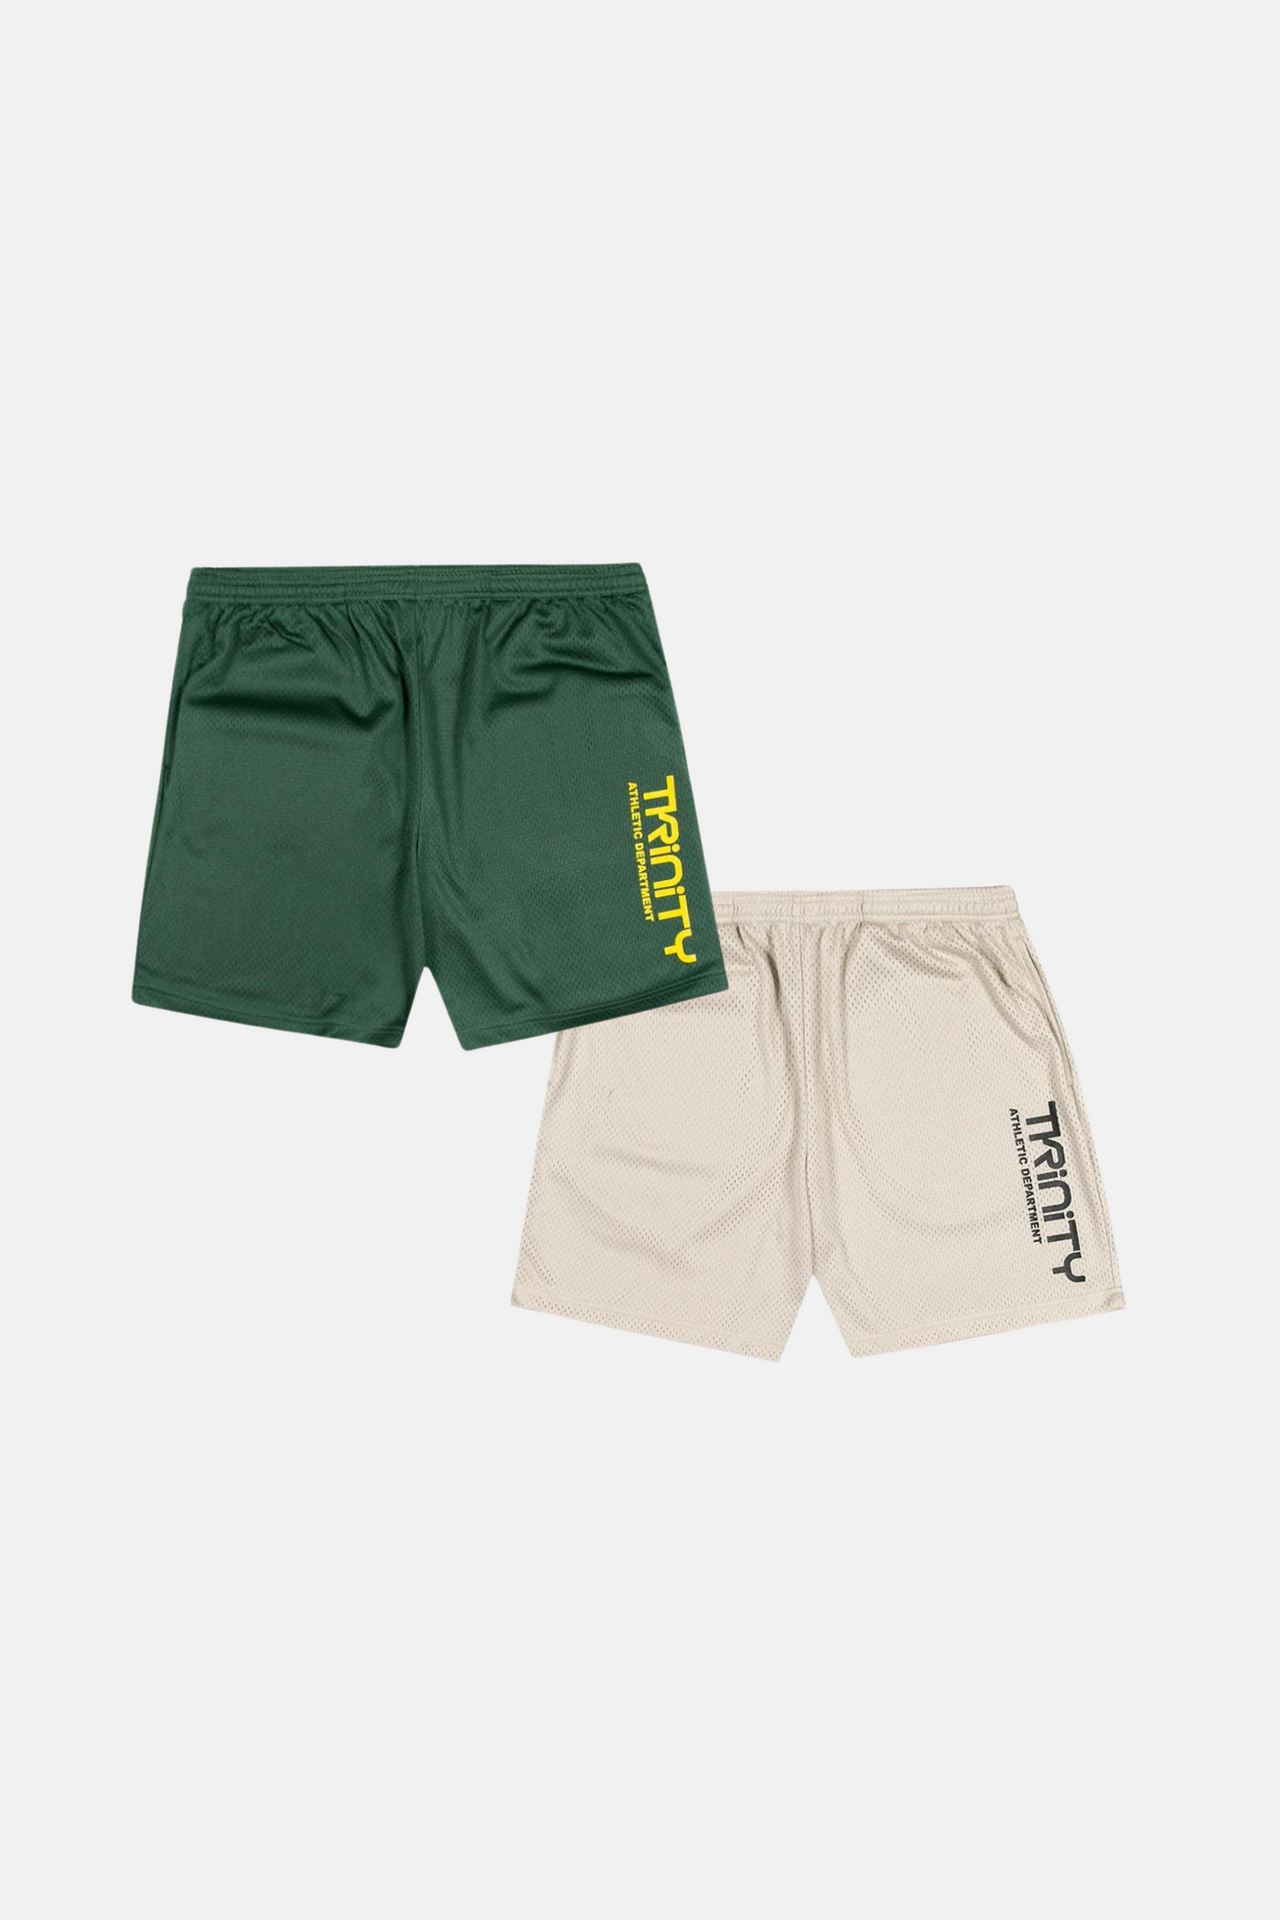 2 Pack Mesh Shorts - Green & Tan